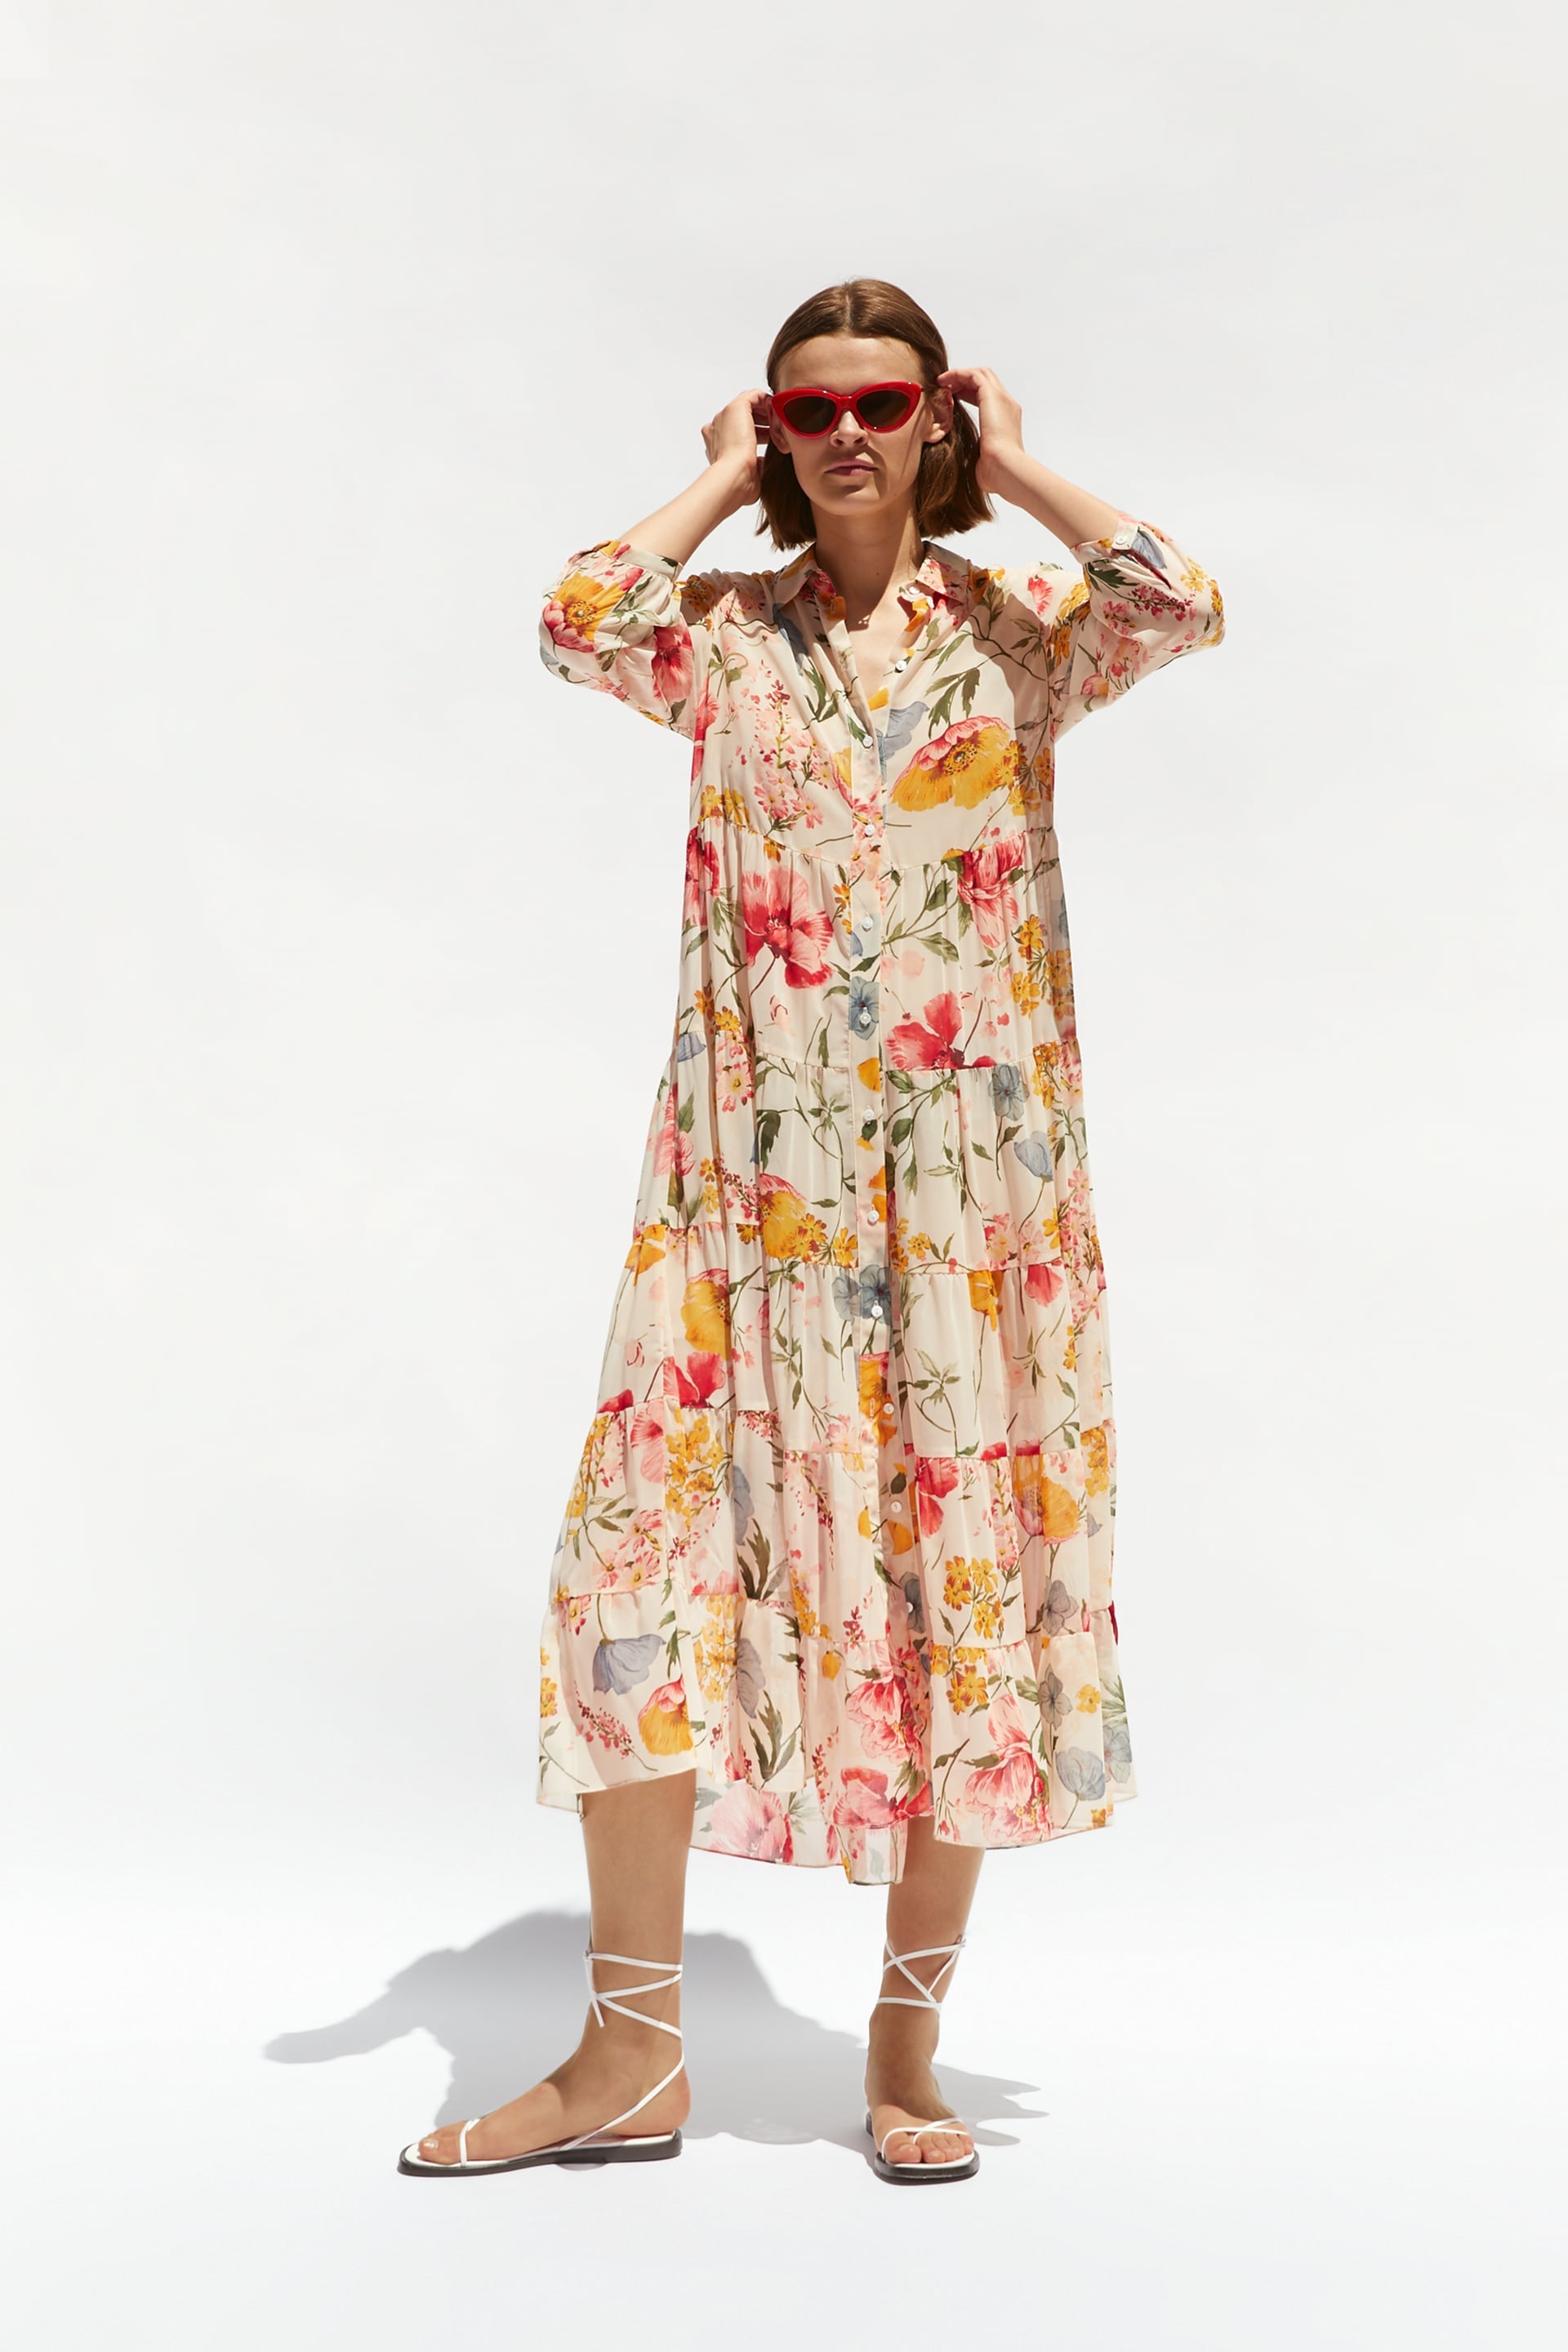 Zara Floral Print Dress | Our Editors 